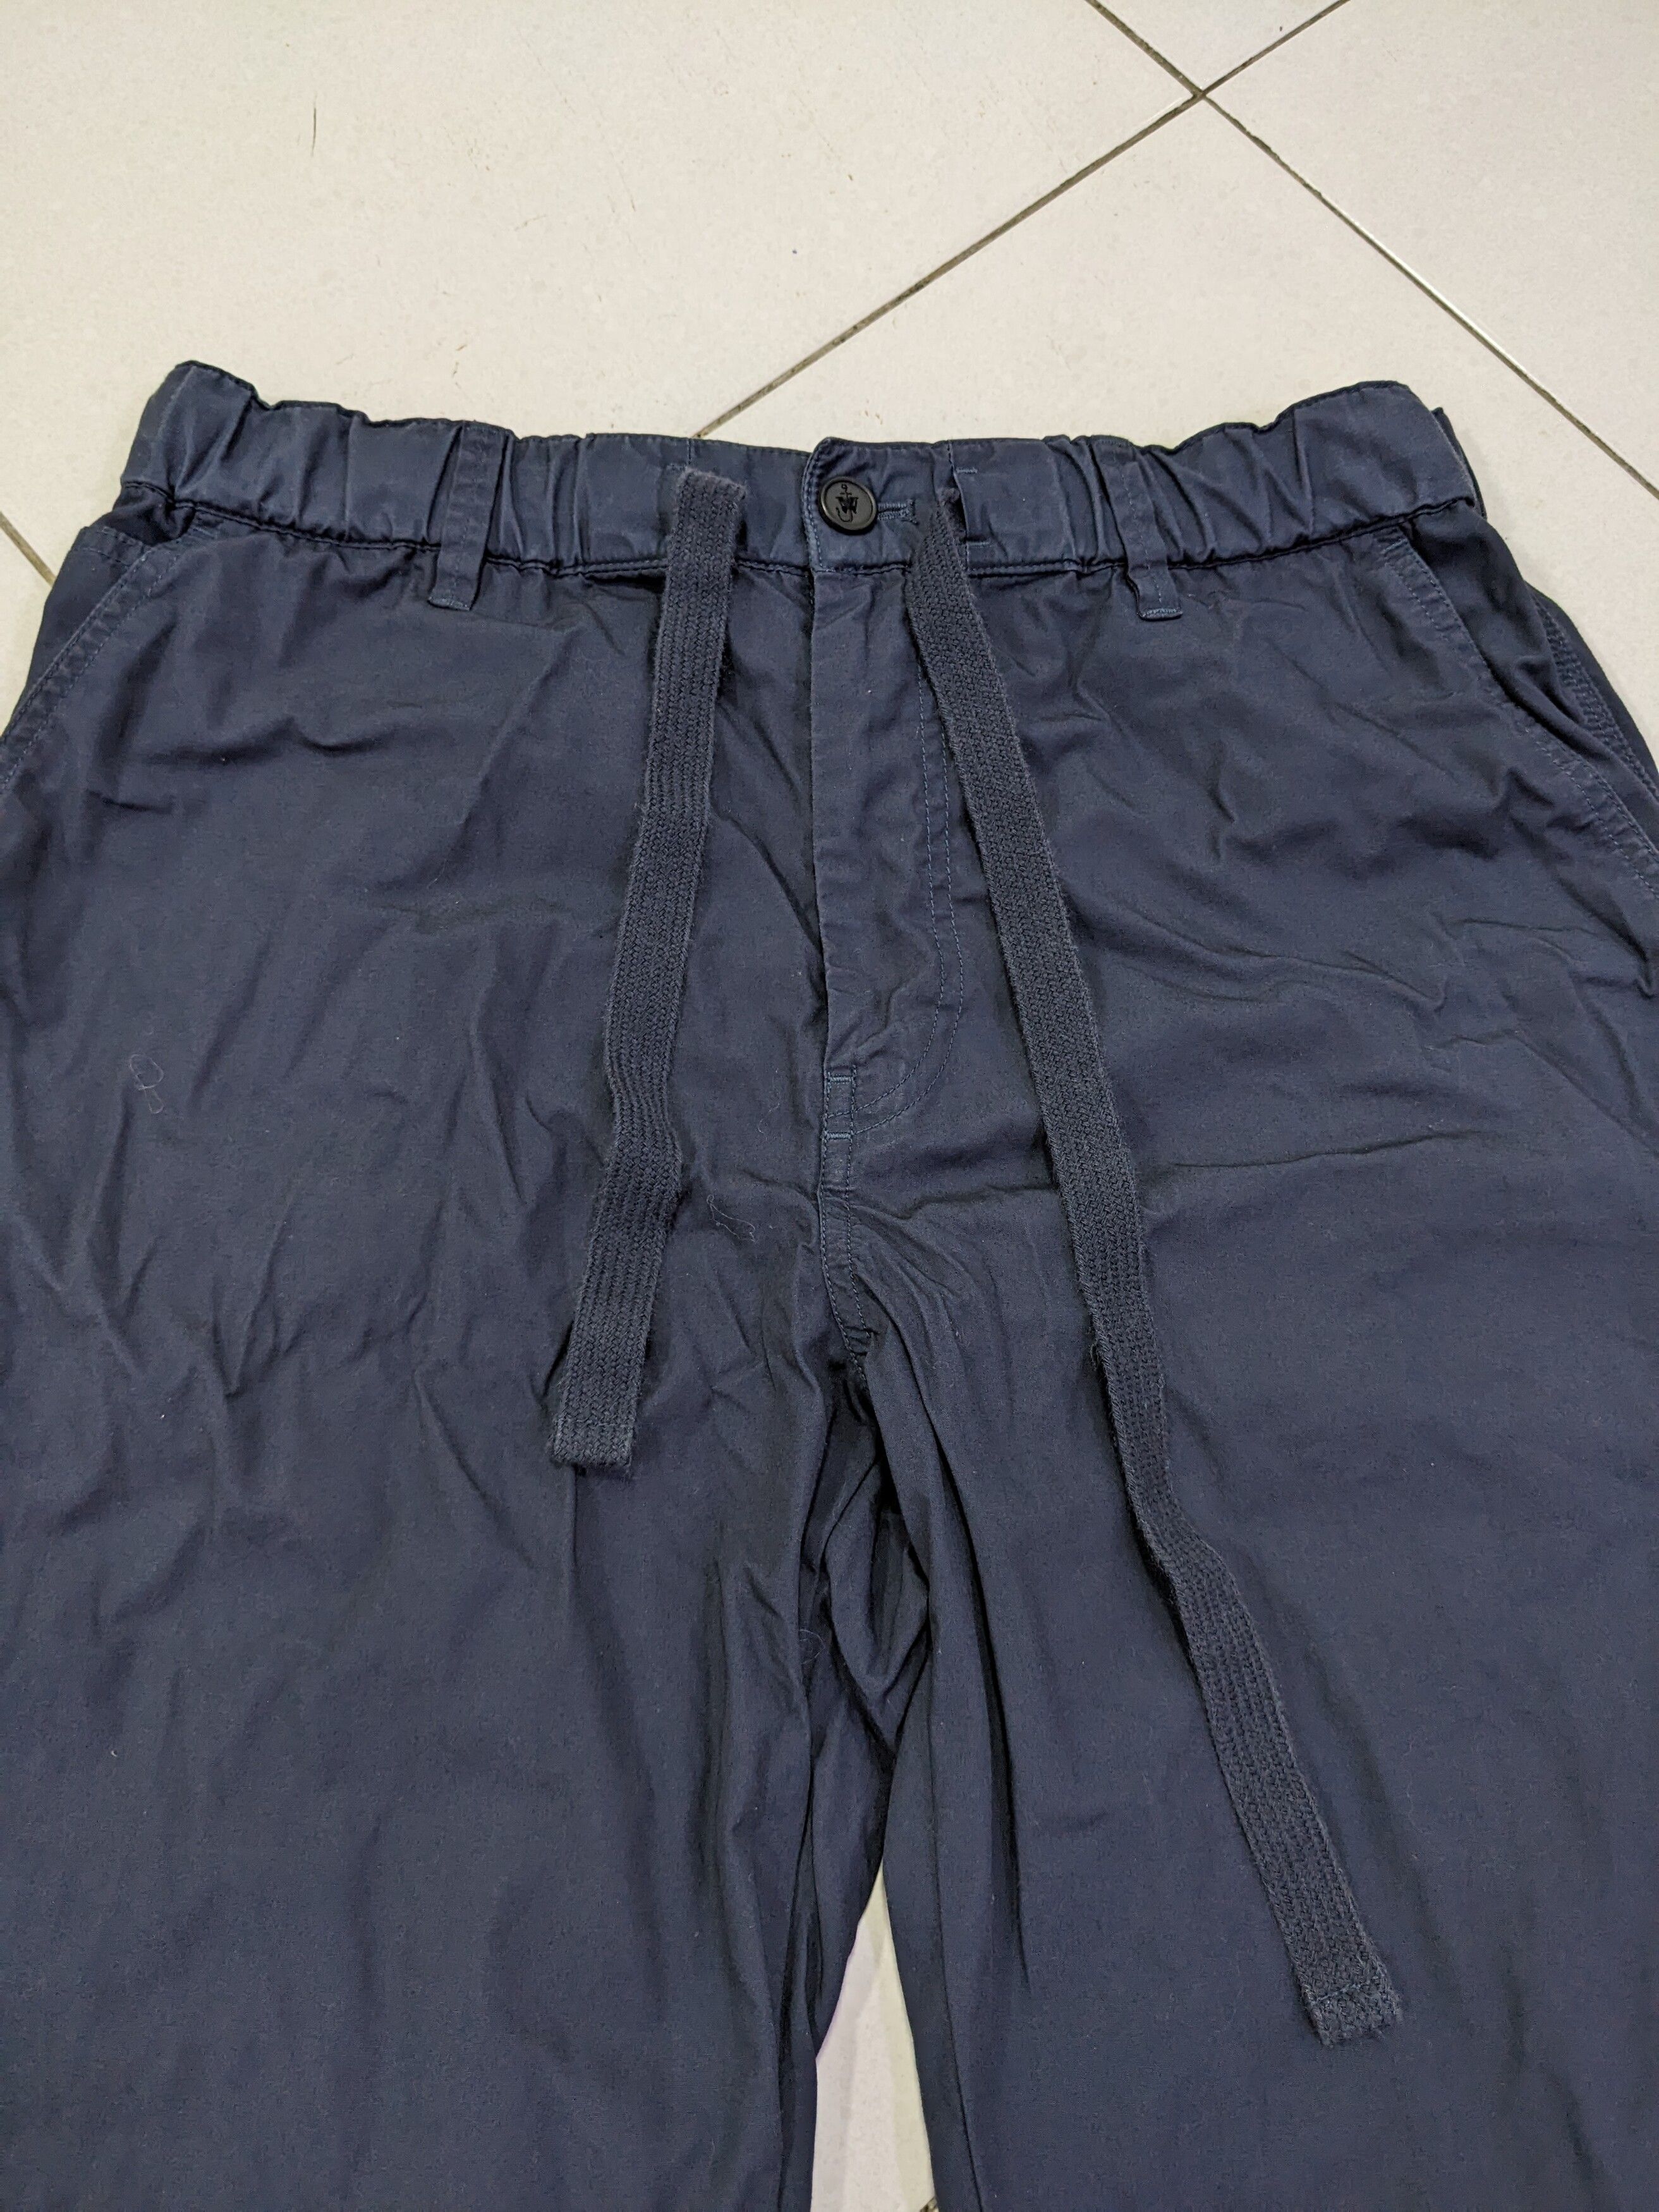 Uniqlo JW Anderson Casual Pants Drawstring Navy Blue - 2